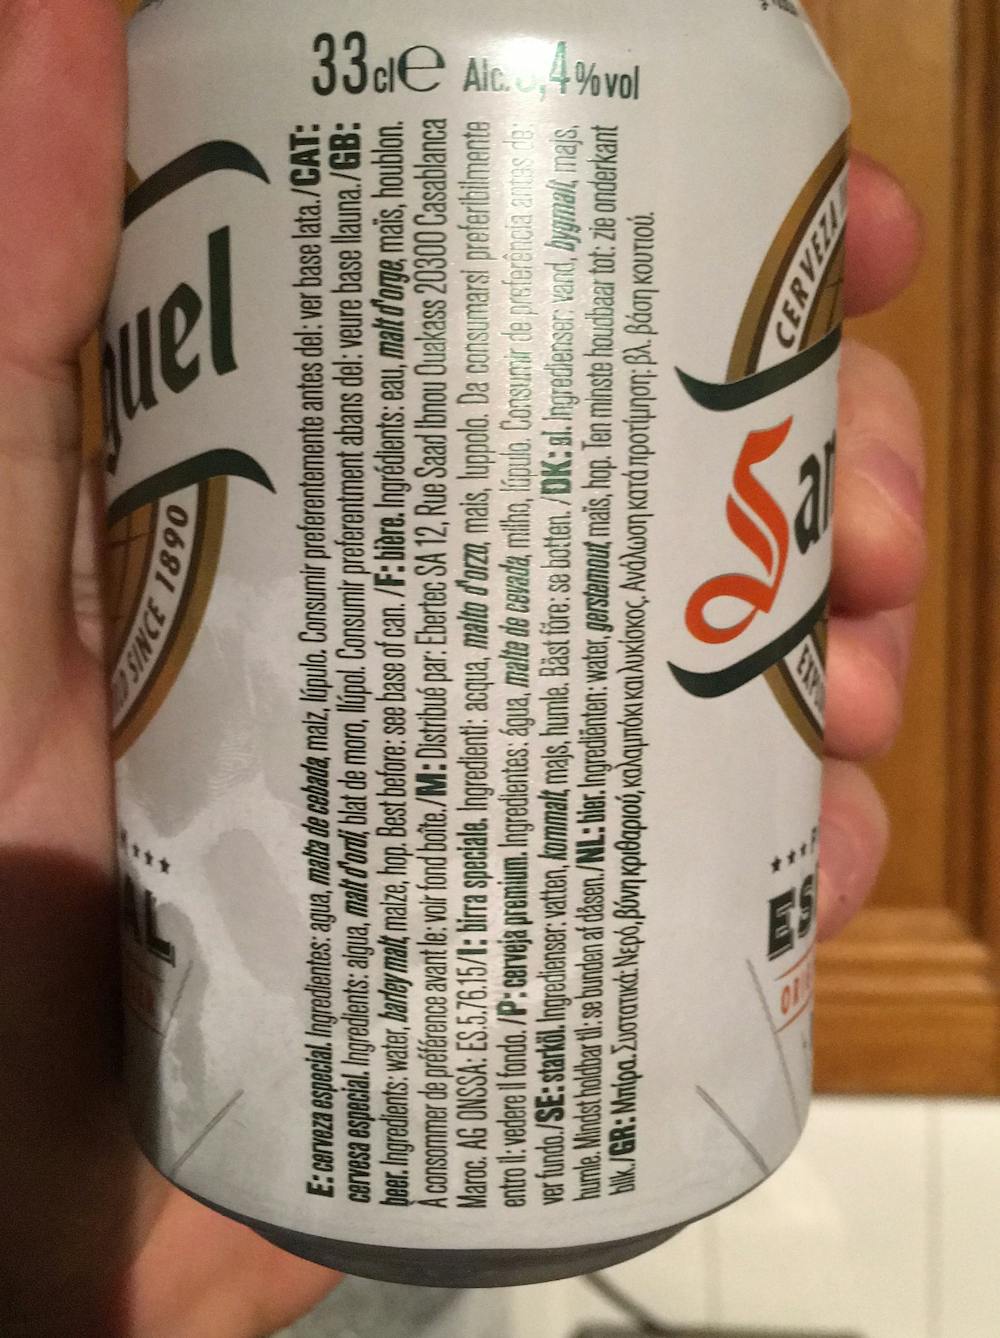 Ingredienslisten til Original lager beer, San Miguel